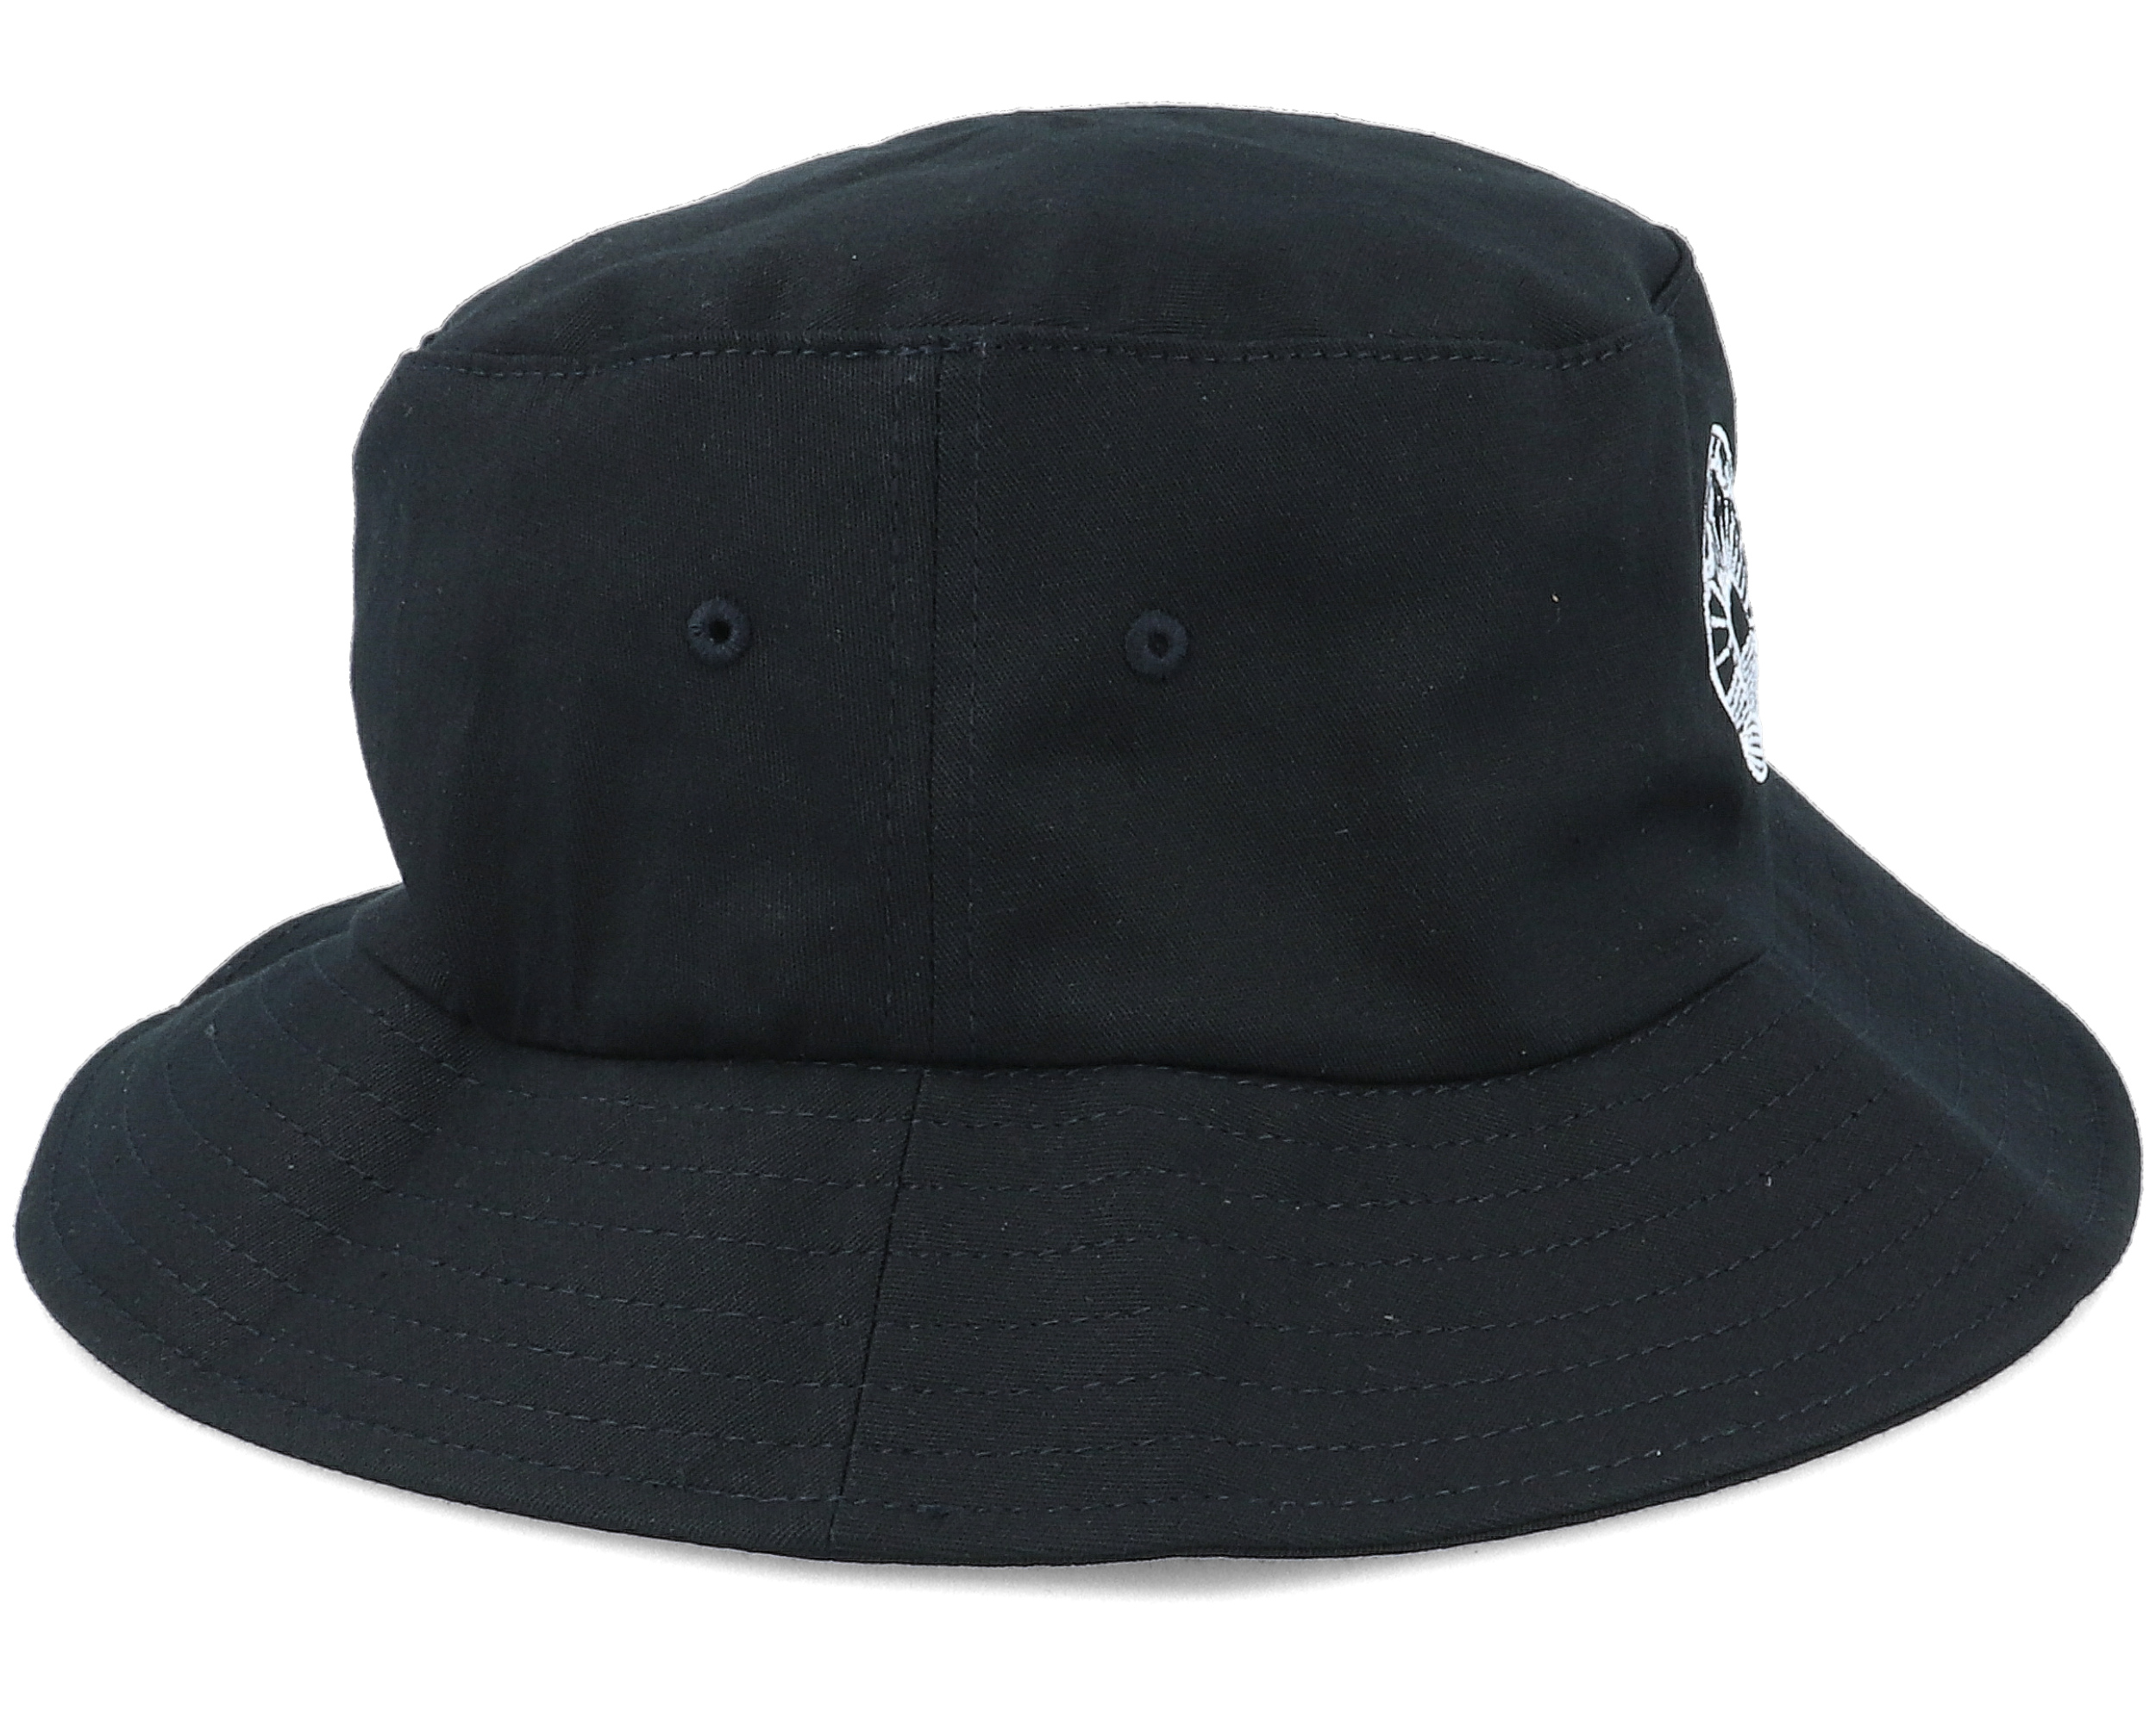 Ocean Sunset Black Bucket - Iconic hats | Hatstore.co.uk